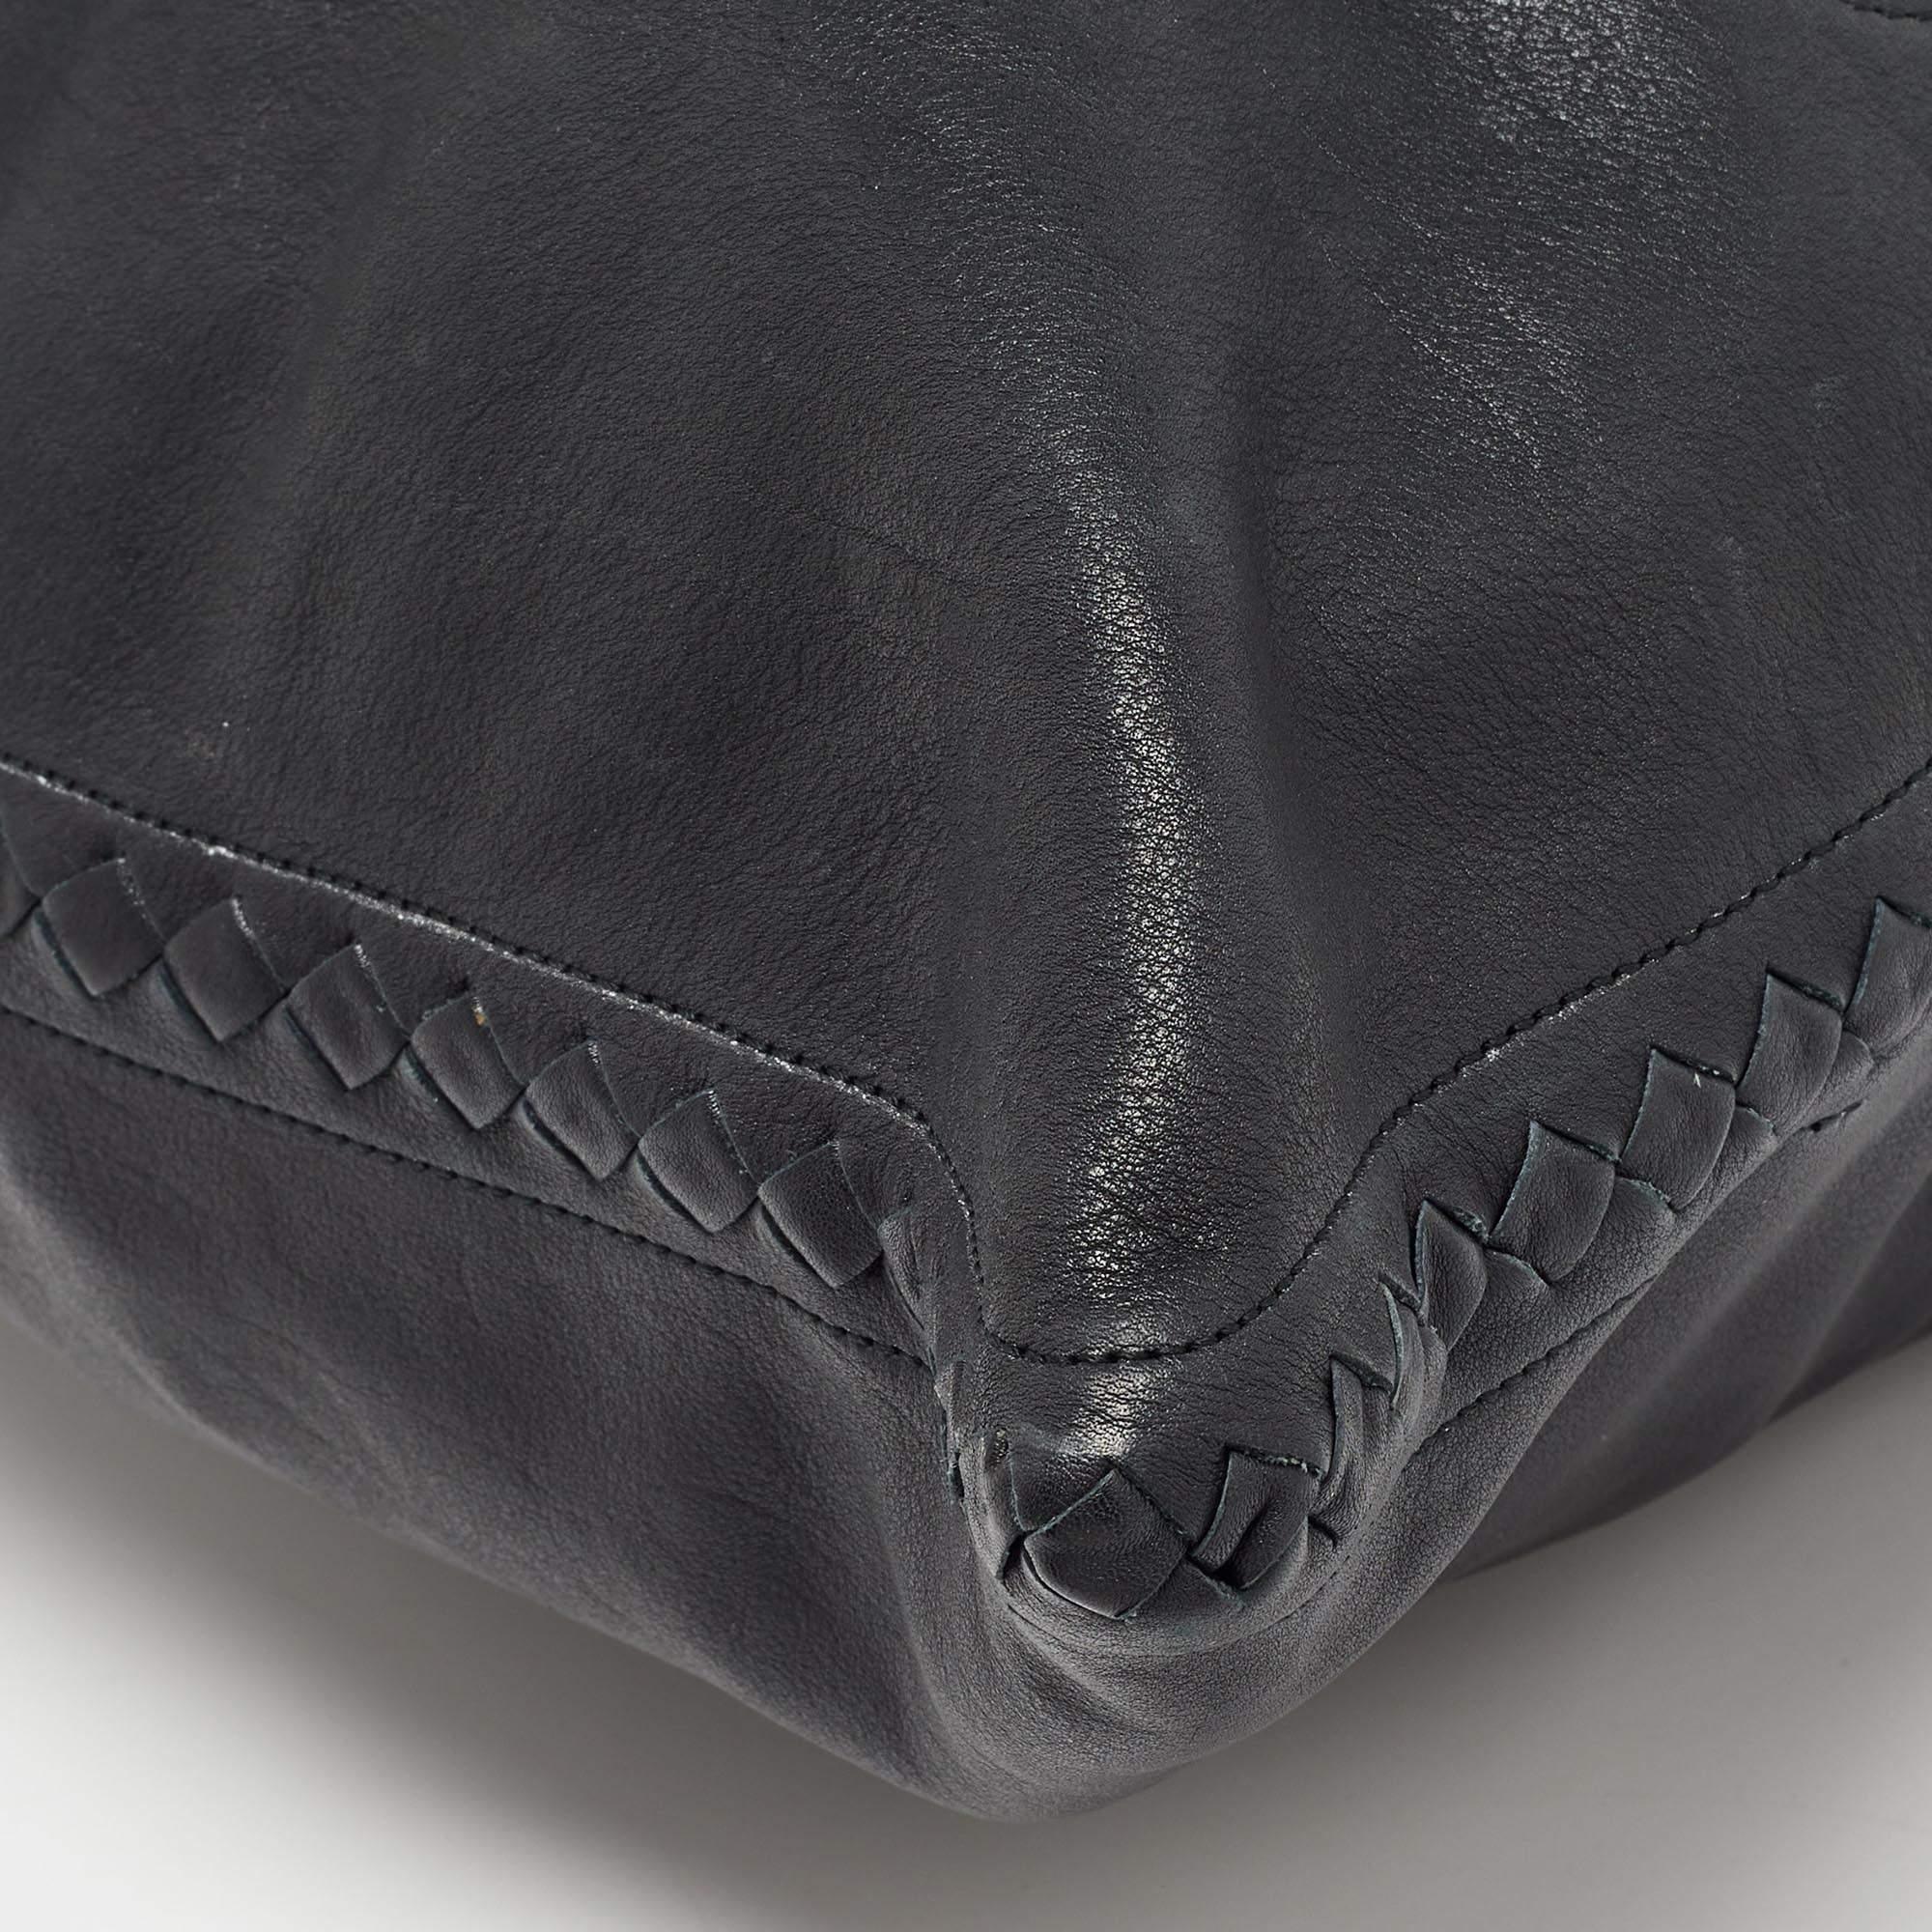 Bottega Veneta Black Leather Tote For Sale 6